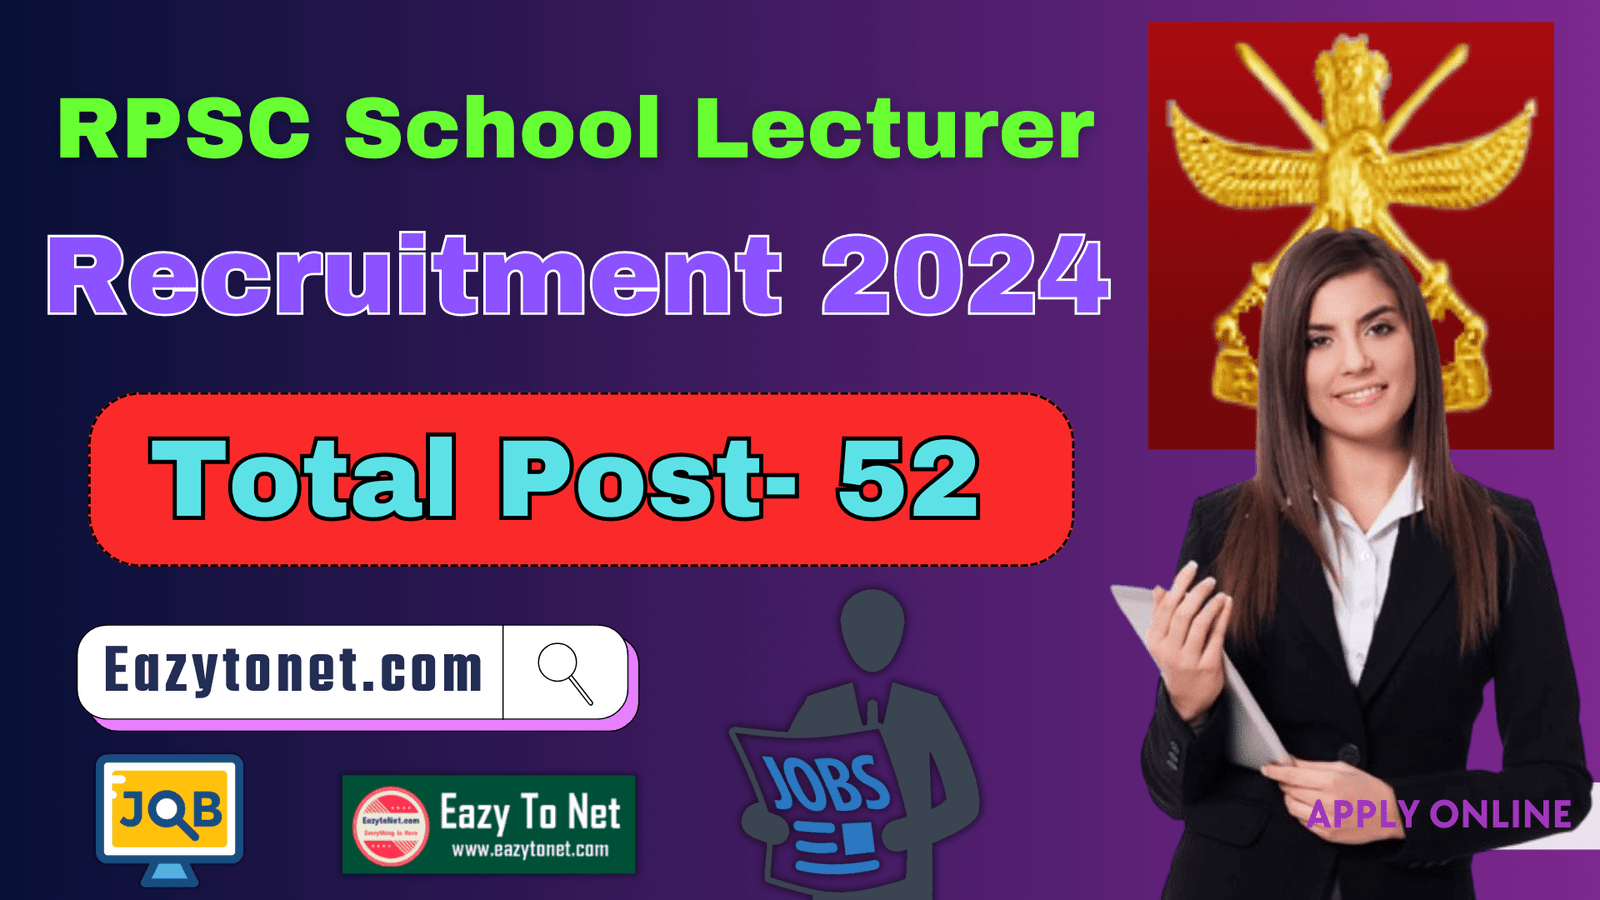 RPSC School Lecturer Recruitment 2024: RPSC School Lecturer Vacancy 2024 Apply Online, Notification Out